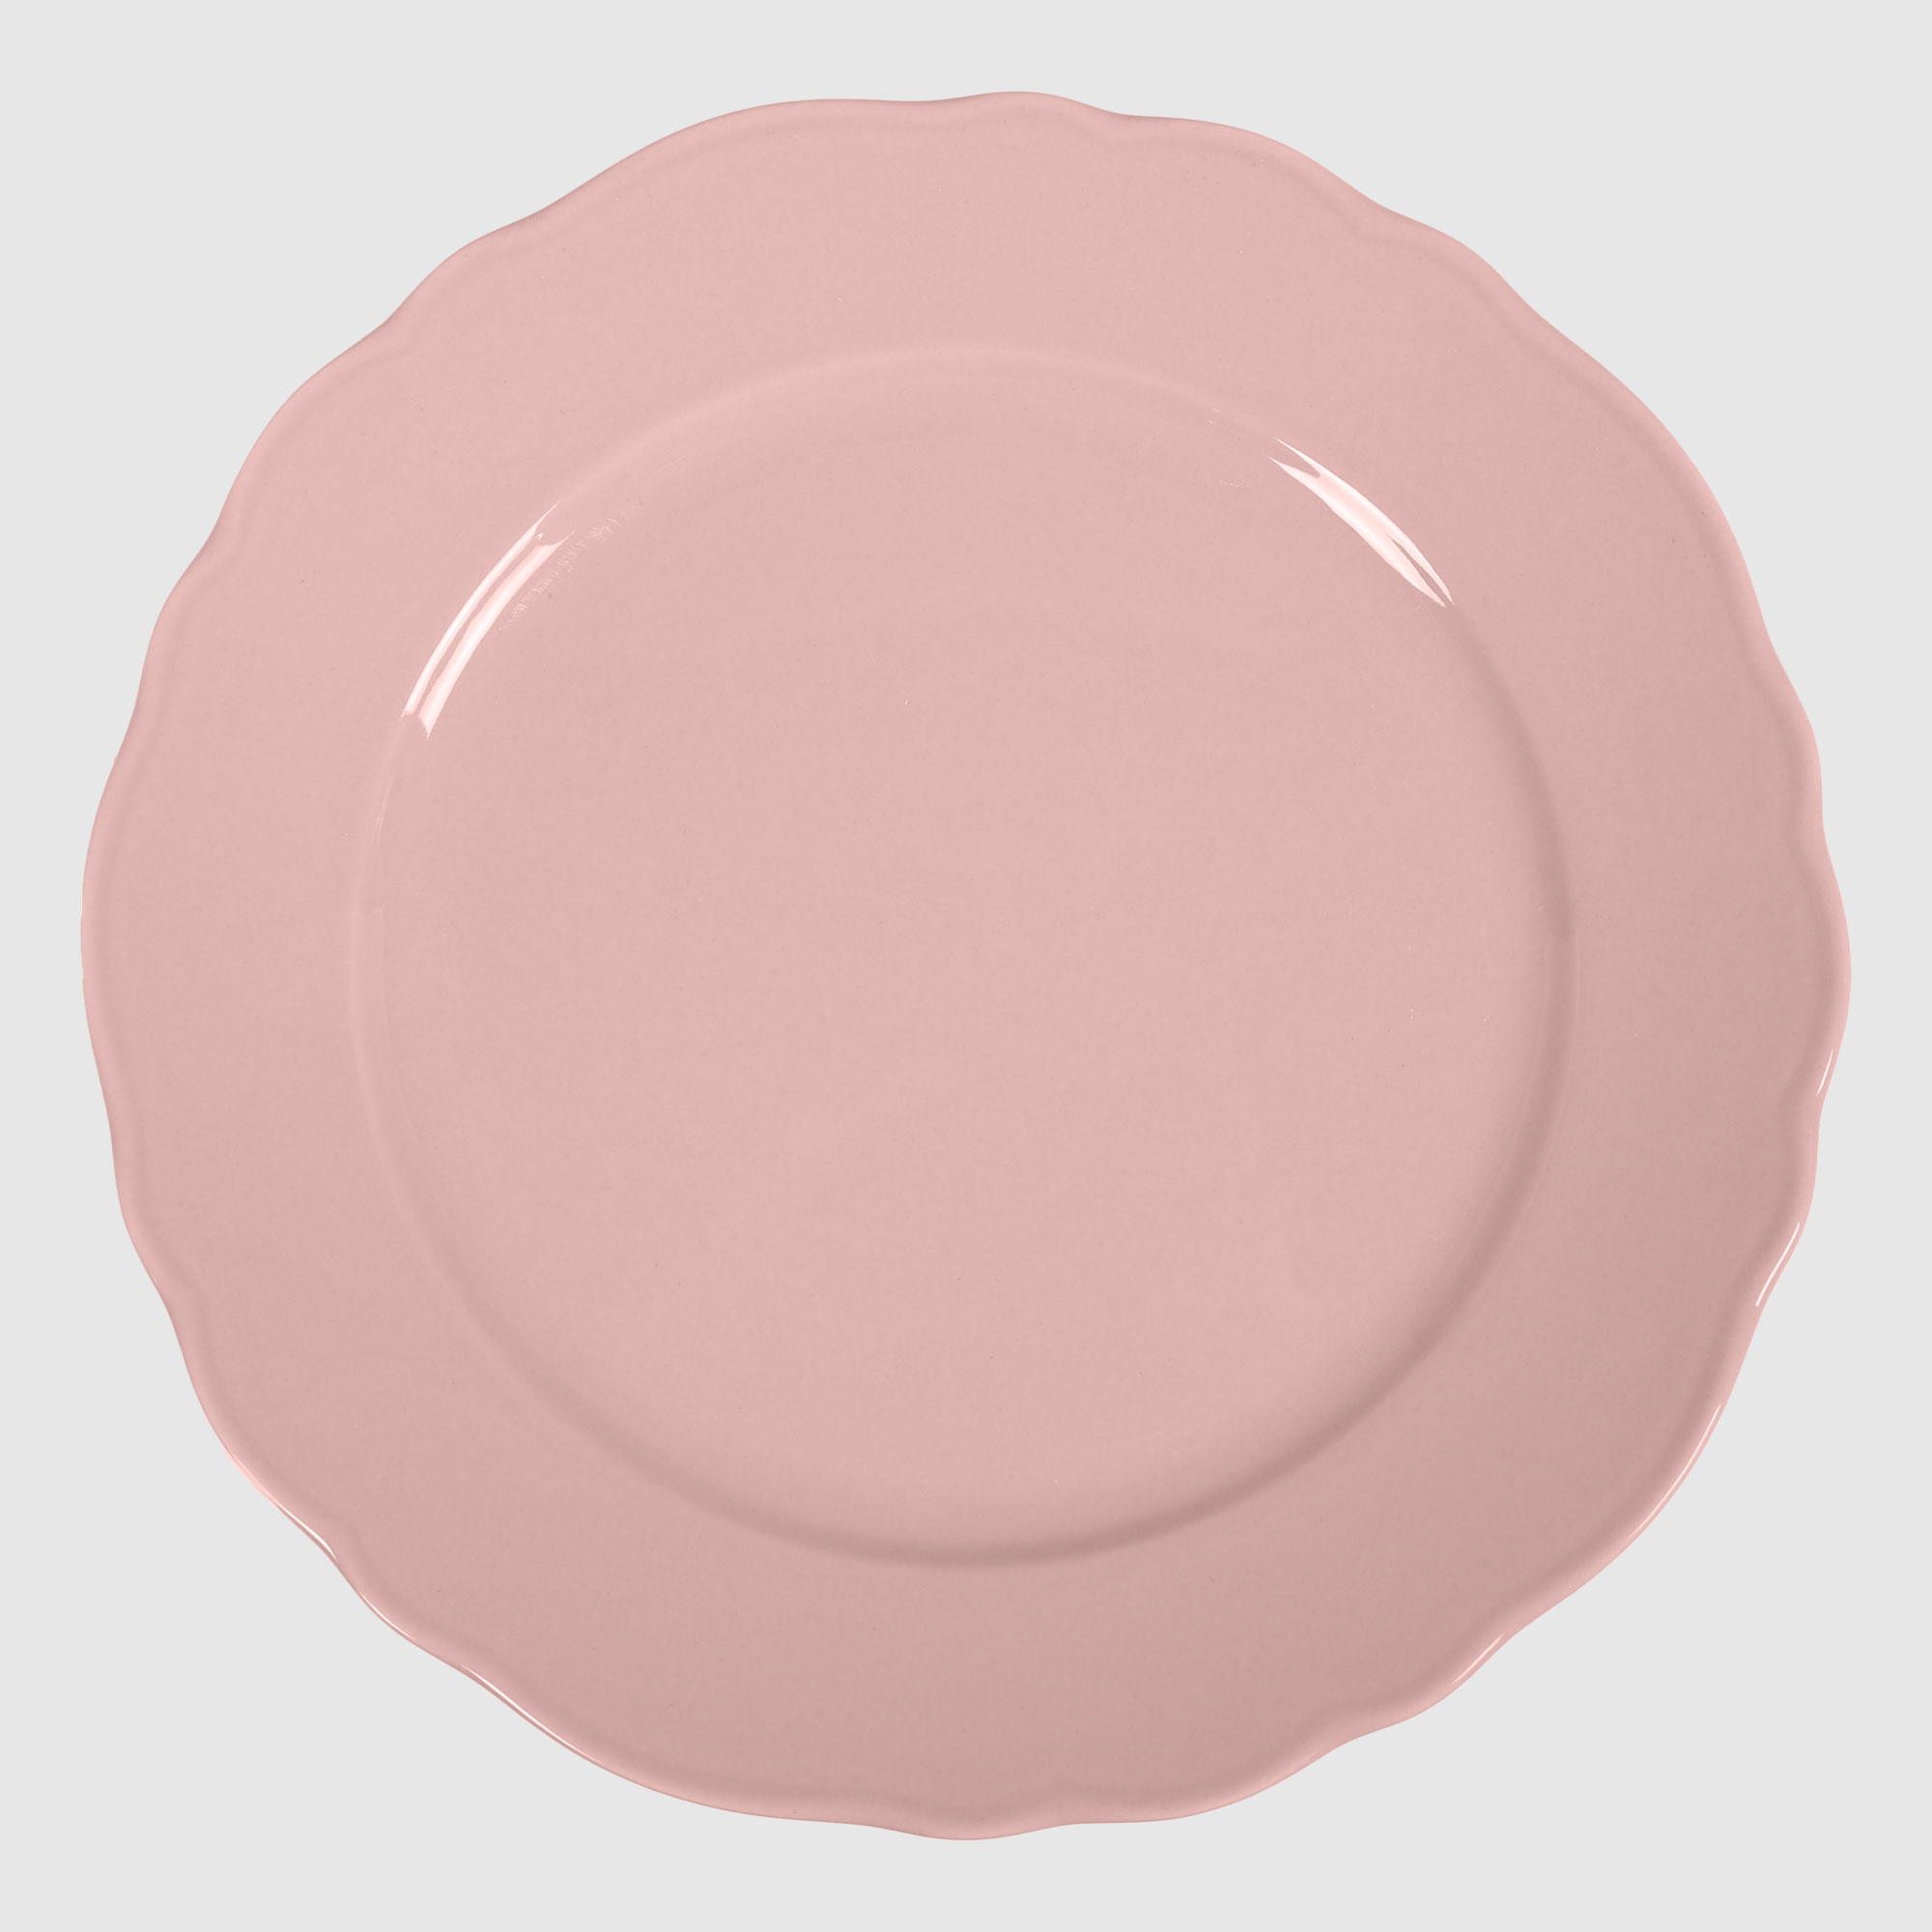 Тарелка Kutahya porselen Lar розовая 26 см тарелка kutahya porselen lar розовая 26 см